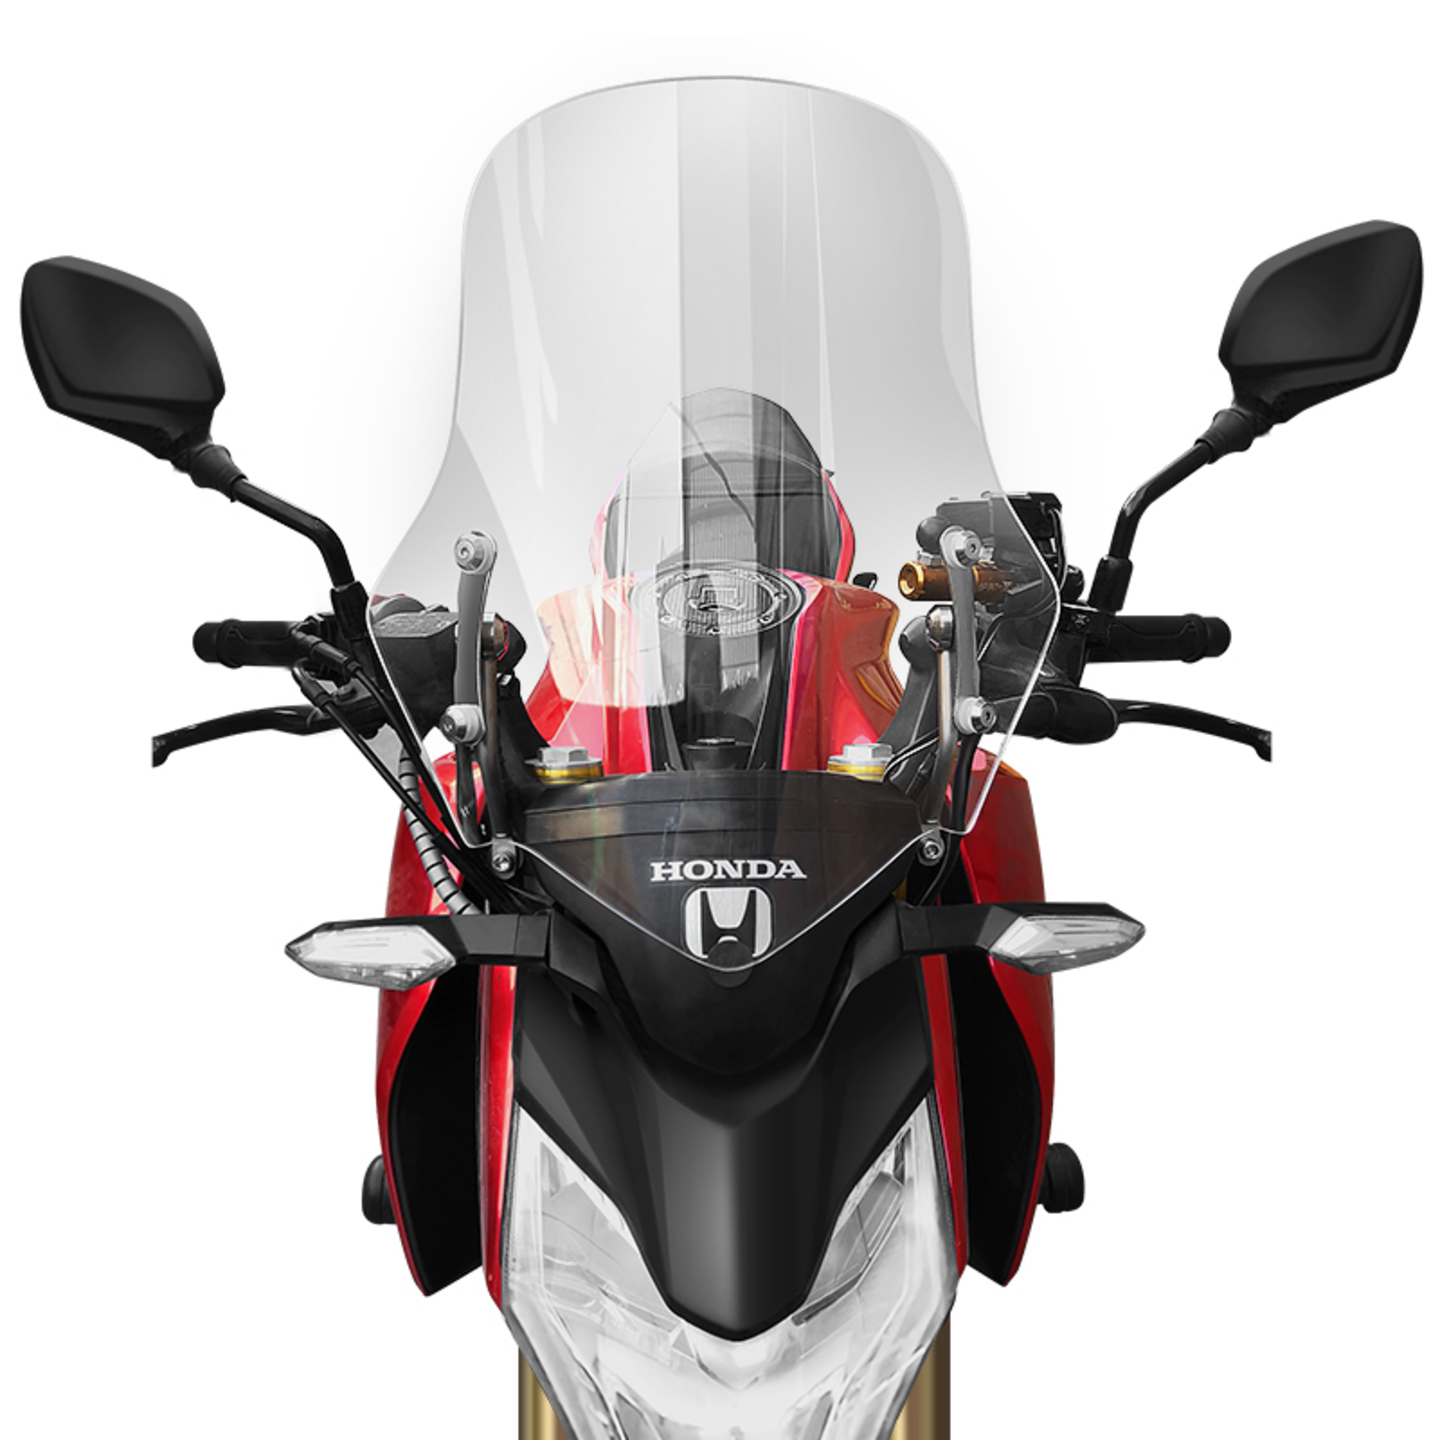 Honda CB190R 4mm touring adventure windscreen handlebar mounted windshield wind screen shield